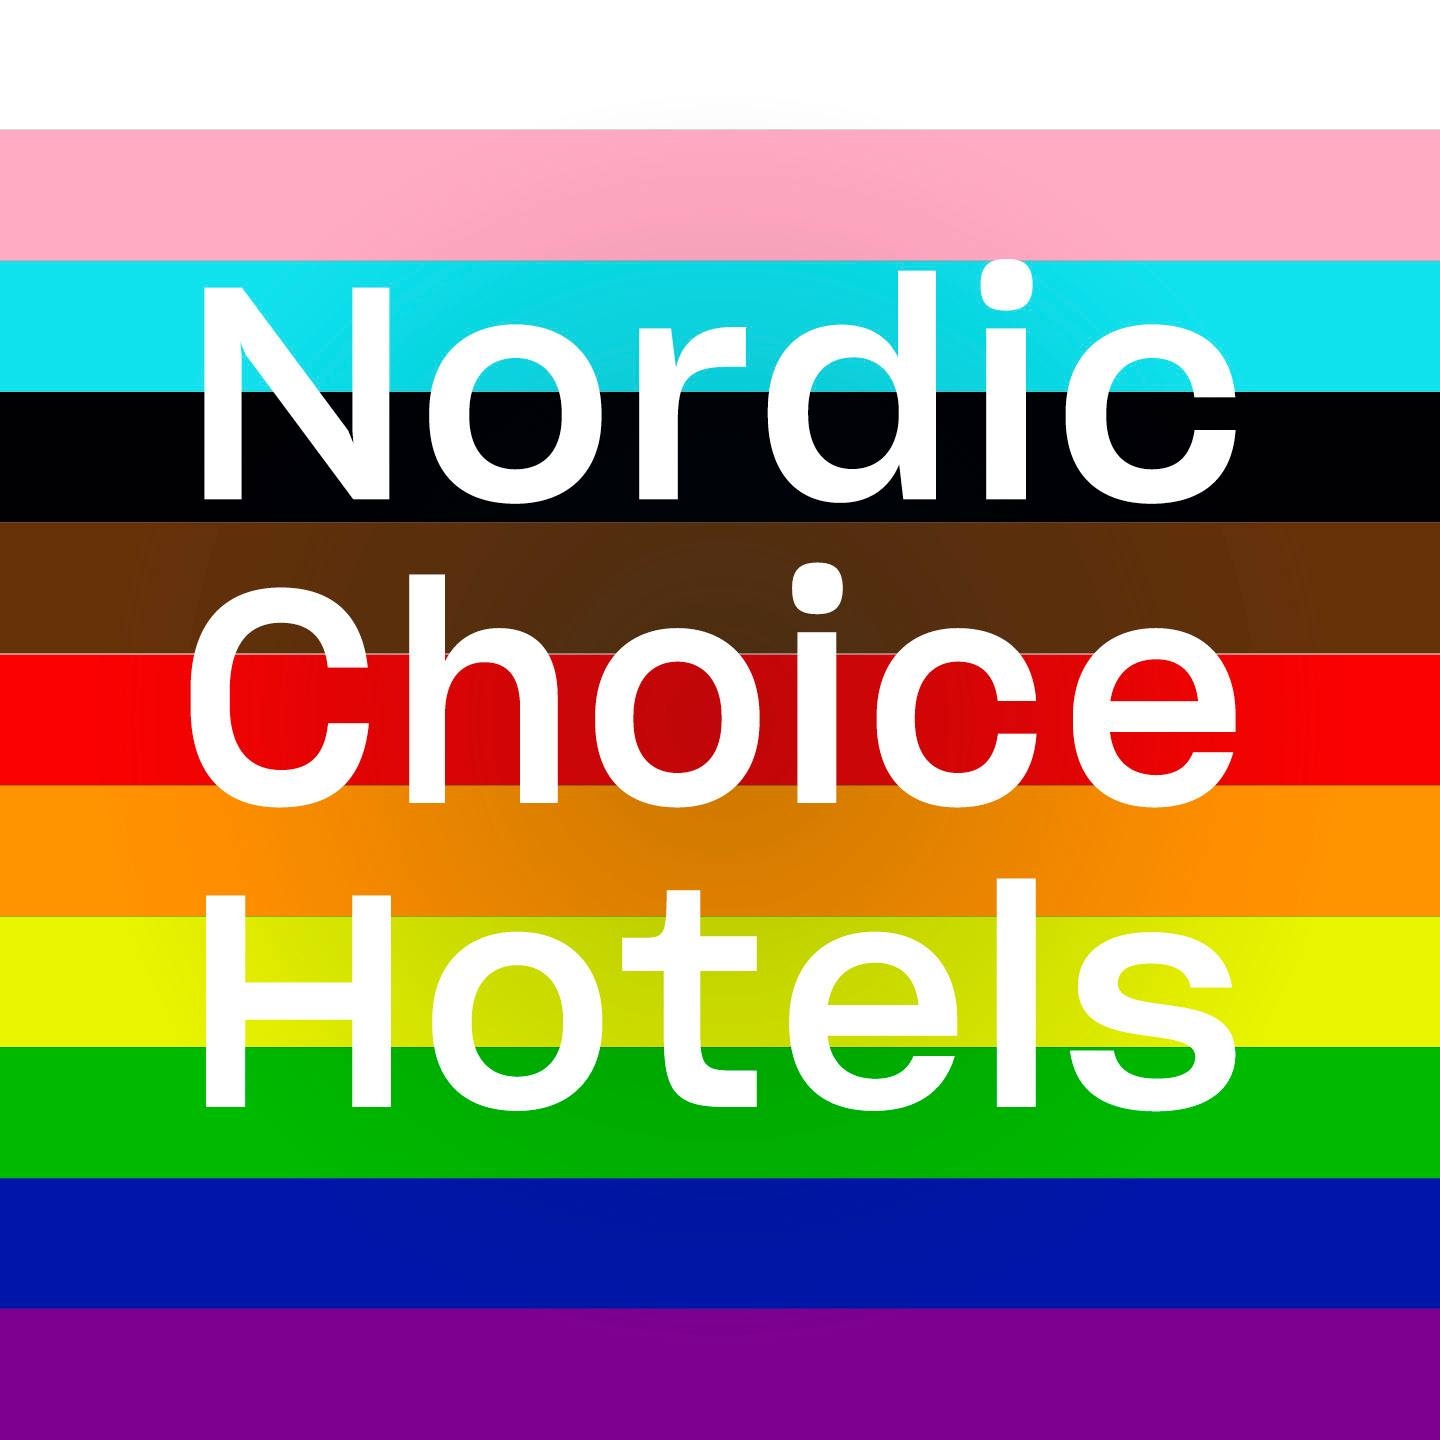 Nordic Choice Hotels Company Profile